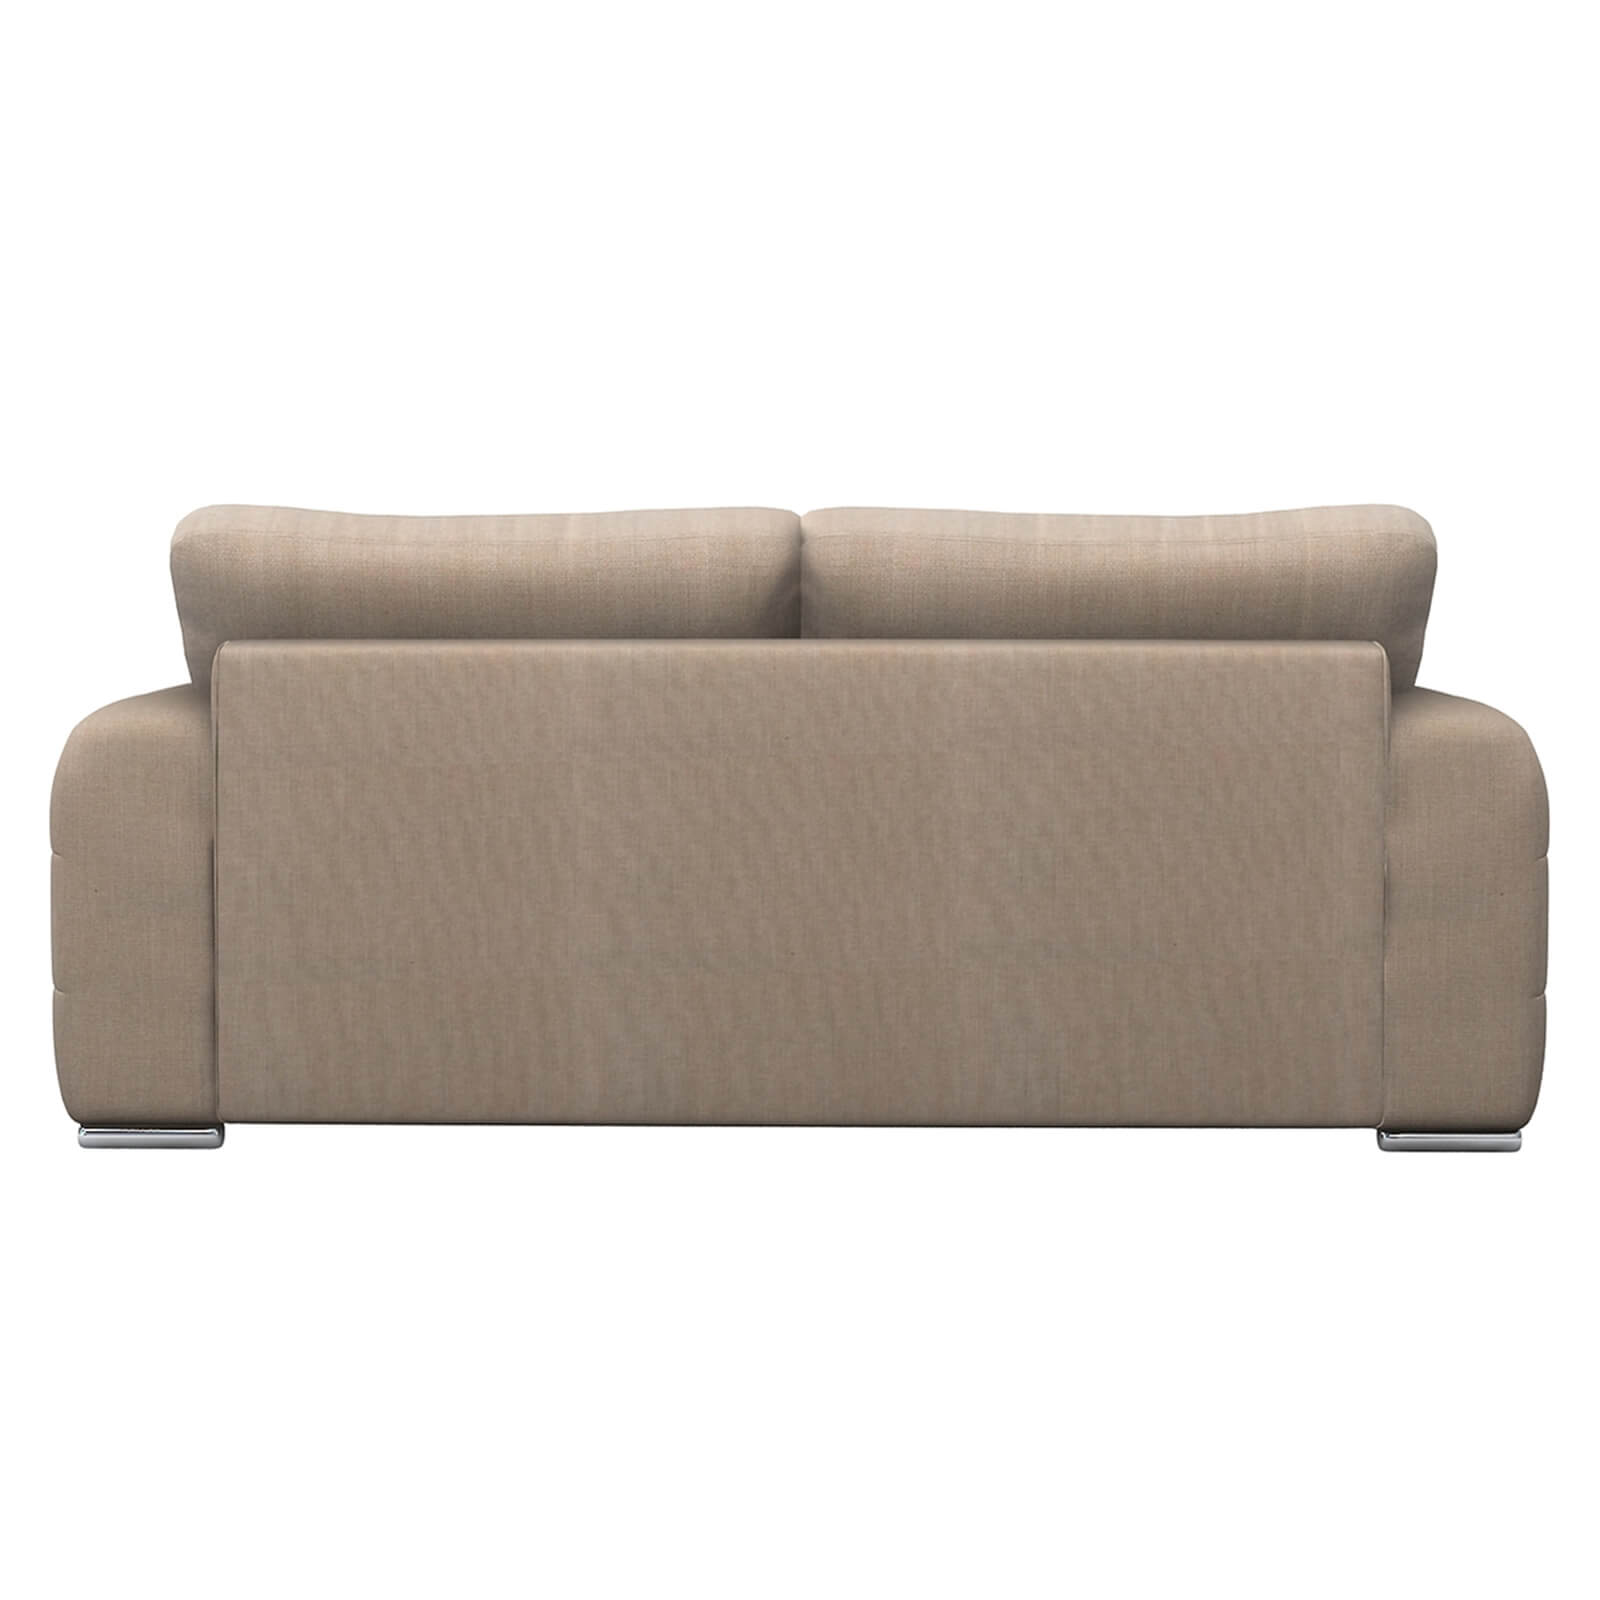 Amethyst 3 Seater Sofa - Sand